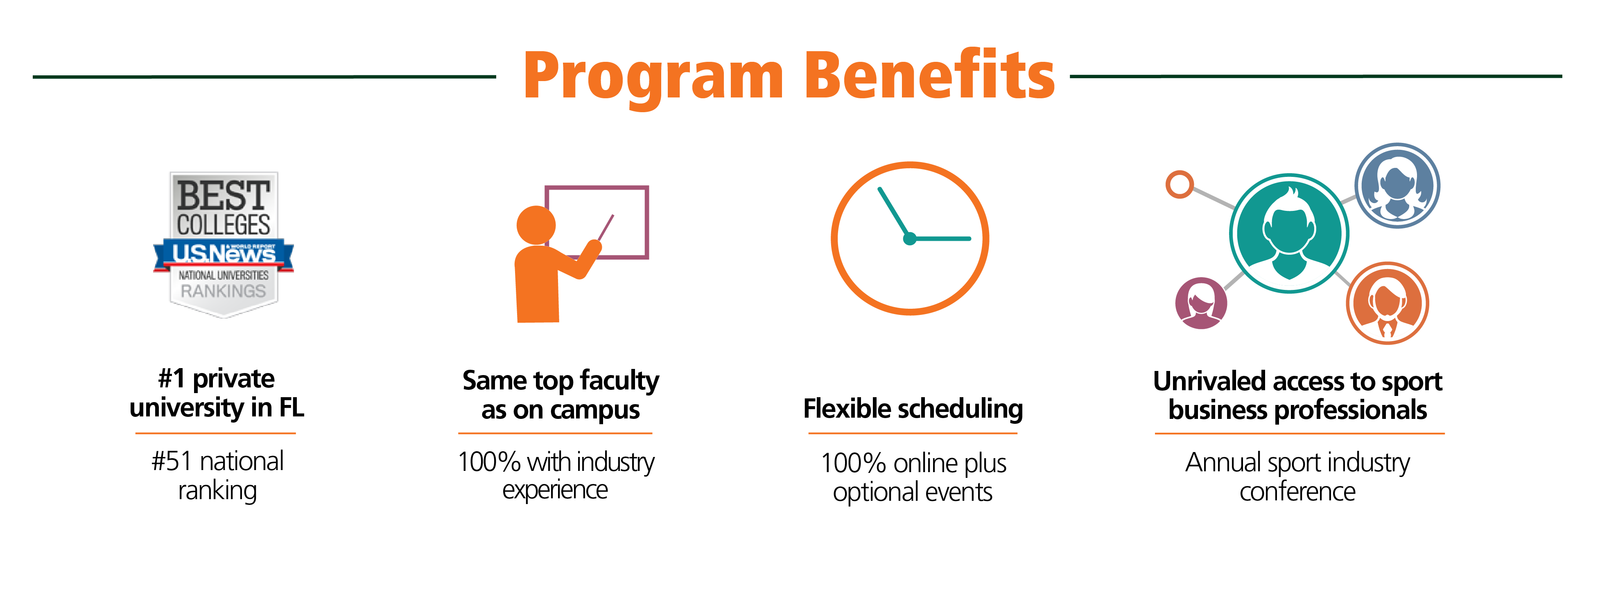 Program benefits